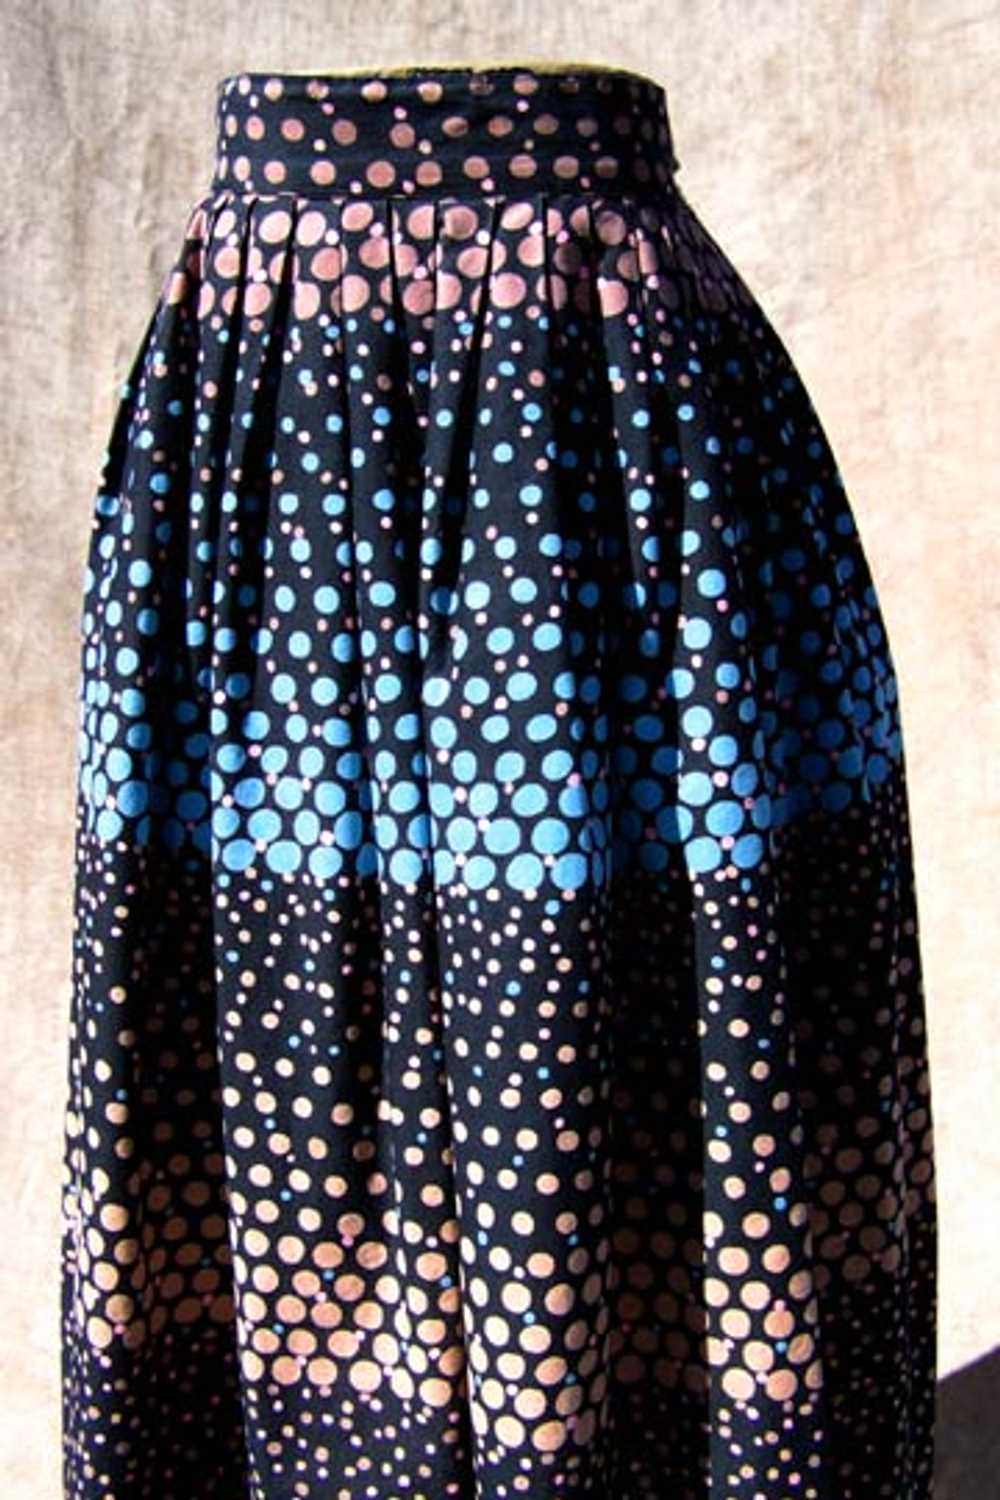 Atomic polka-dot skirt - image 5